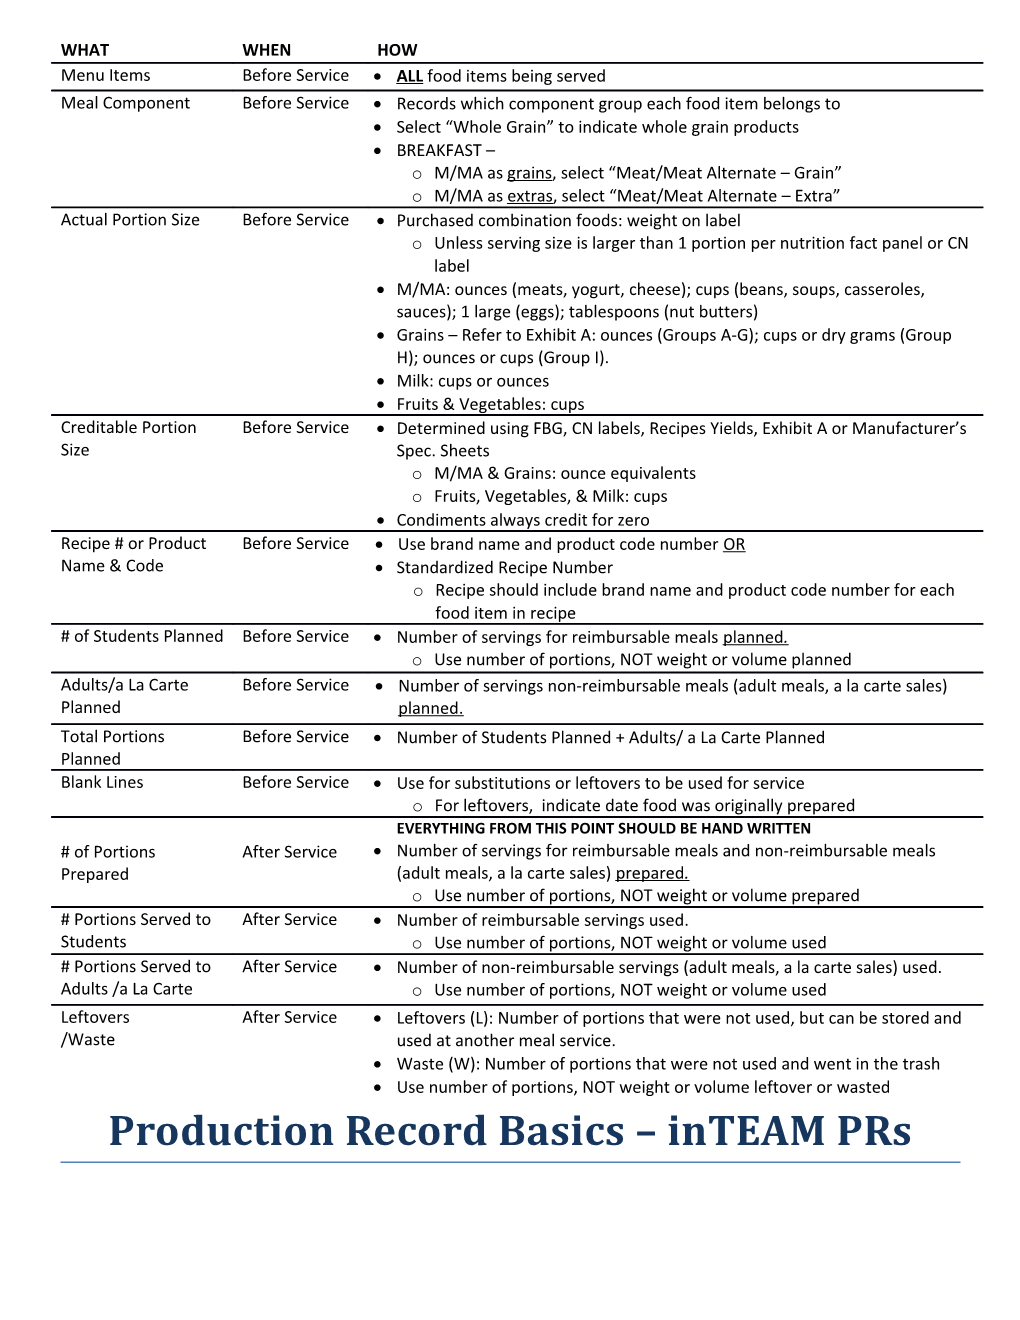 Production Record Basics Inteam Prs